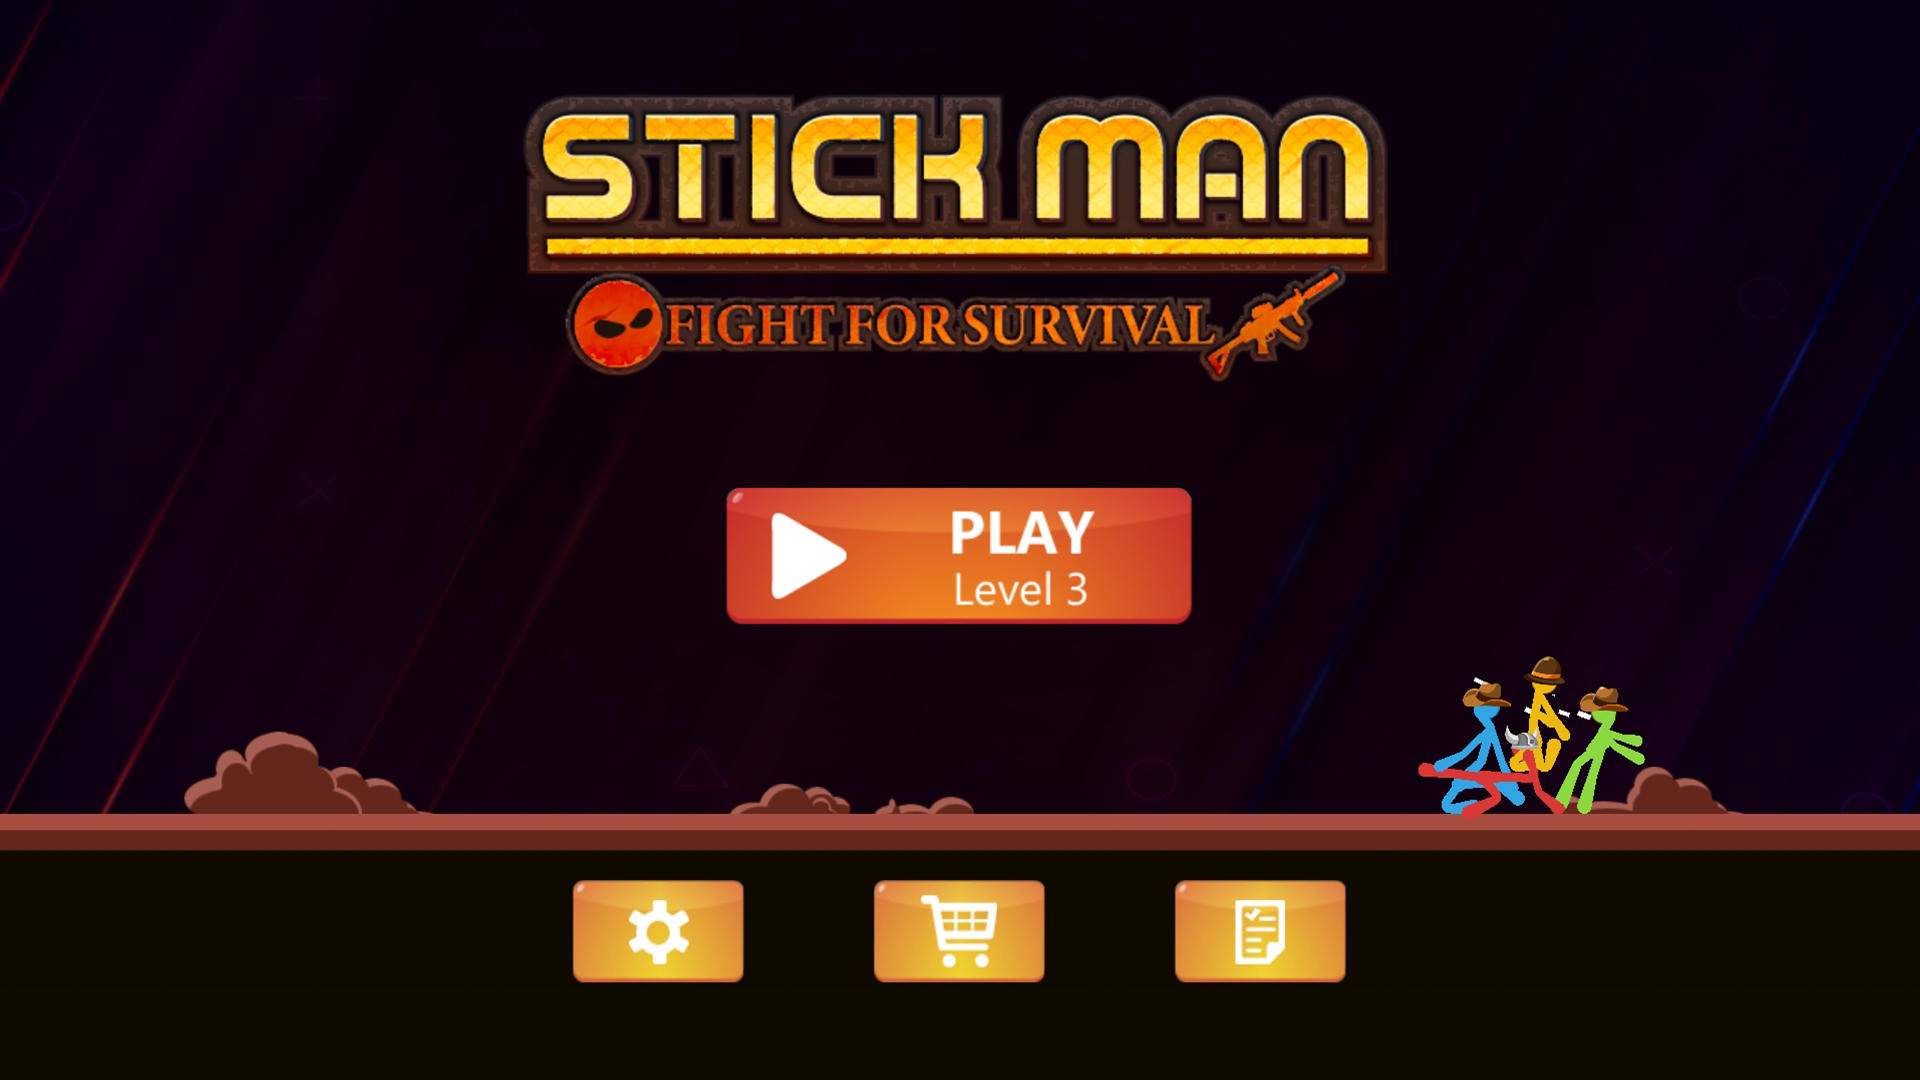 Stickman Fight APK voor Android Download